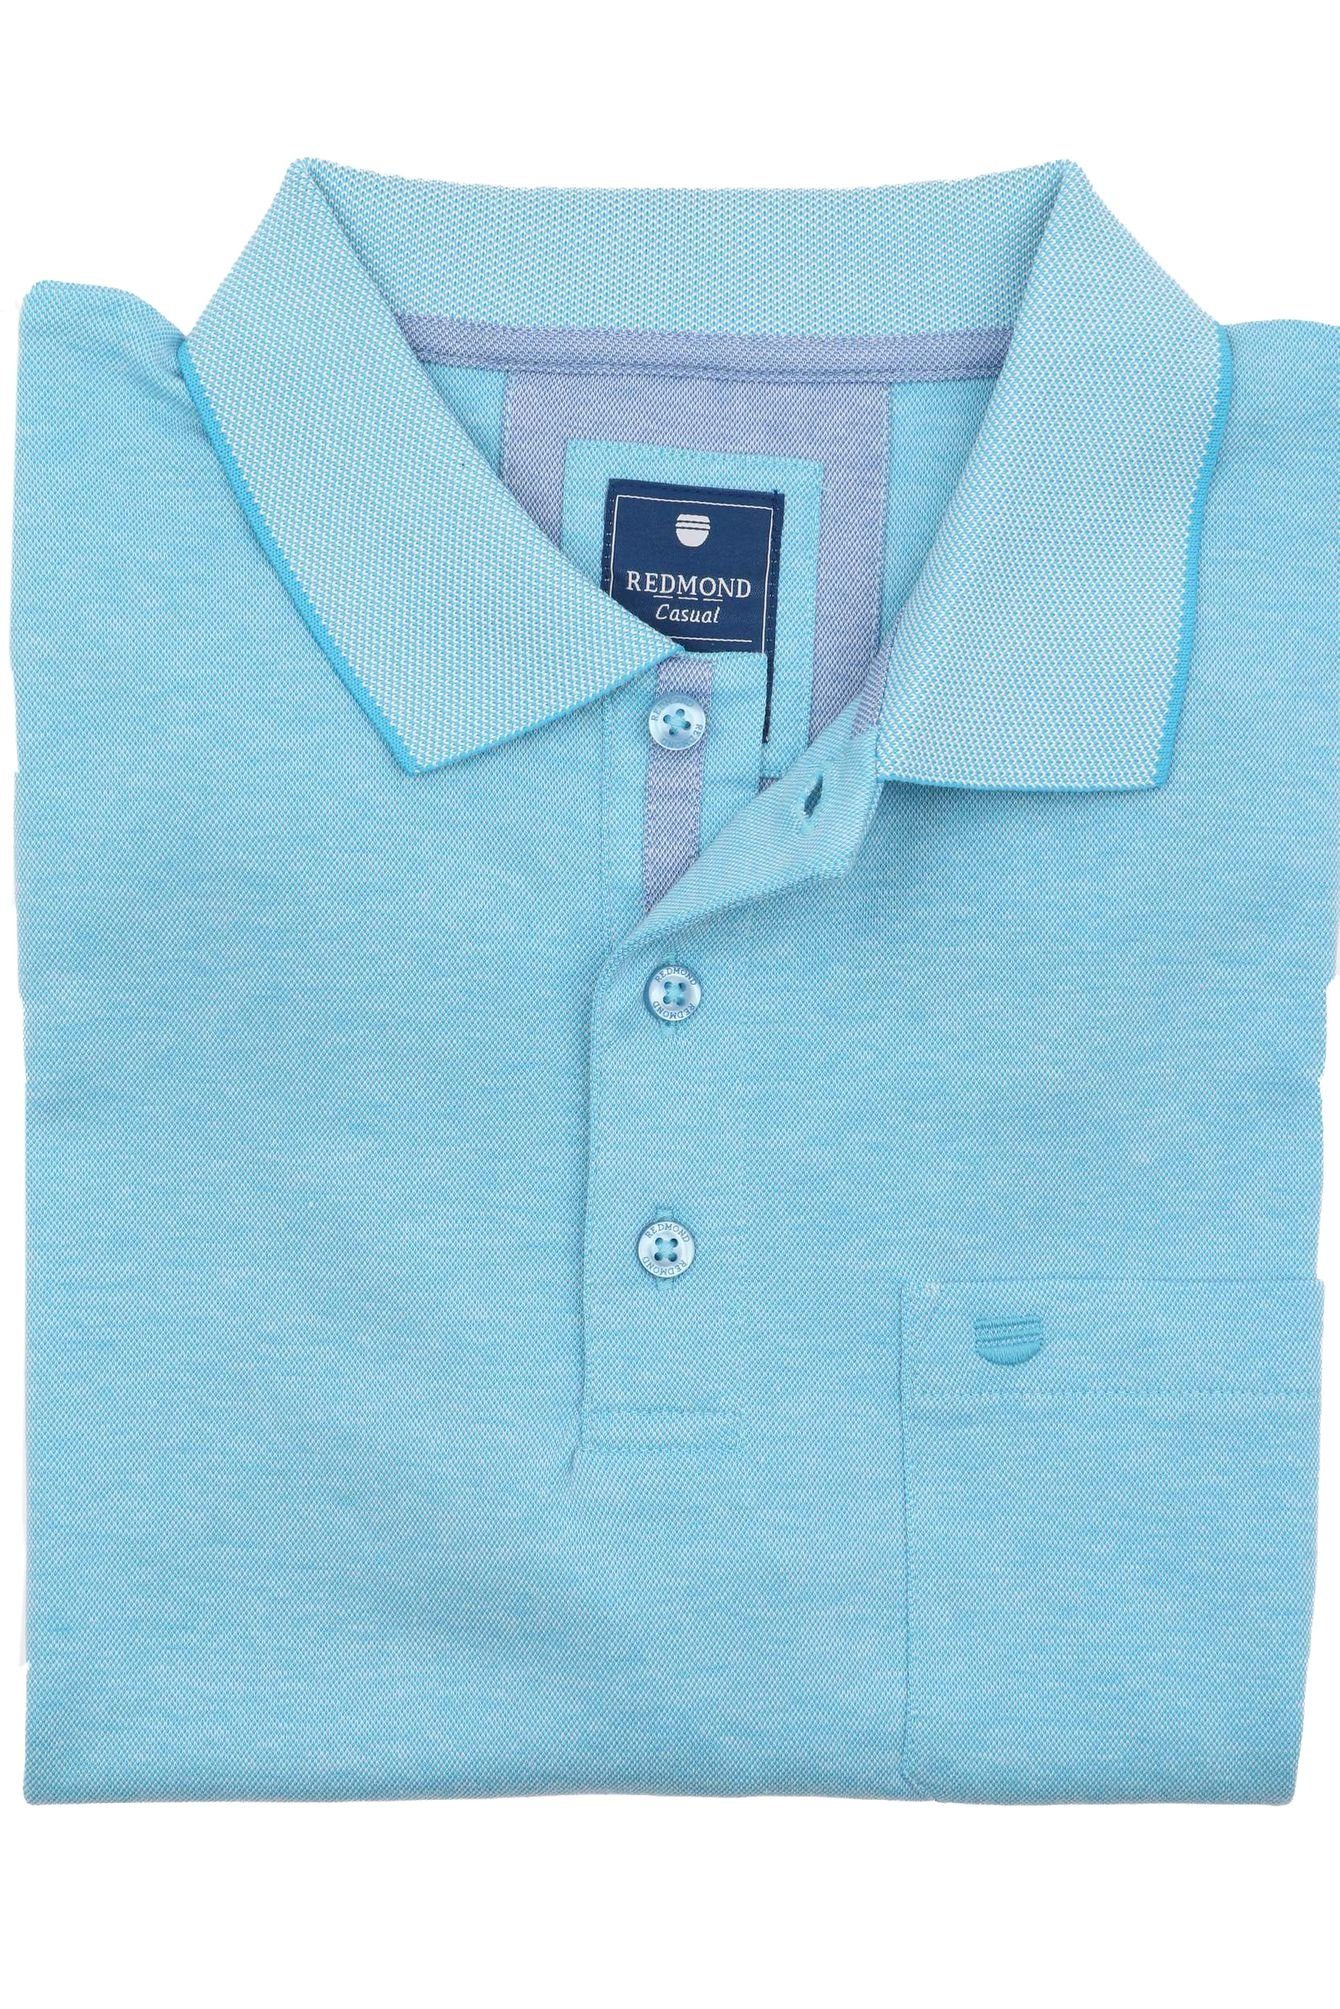 Redmond Poloshirt Poloshirt Blau (15)